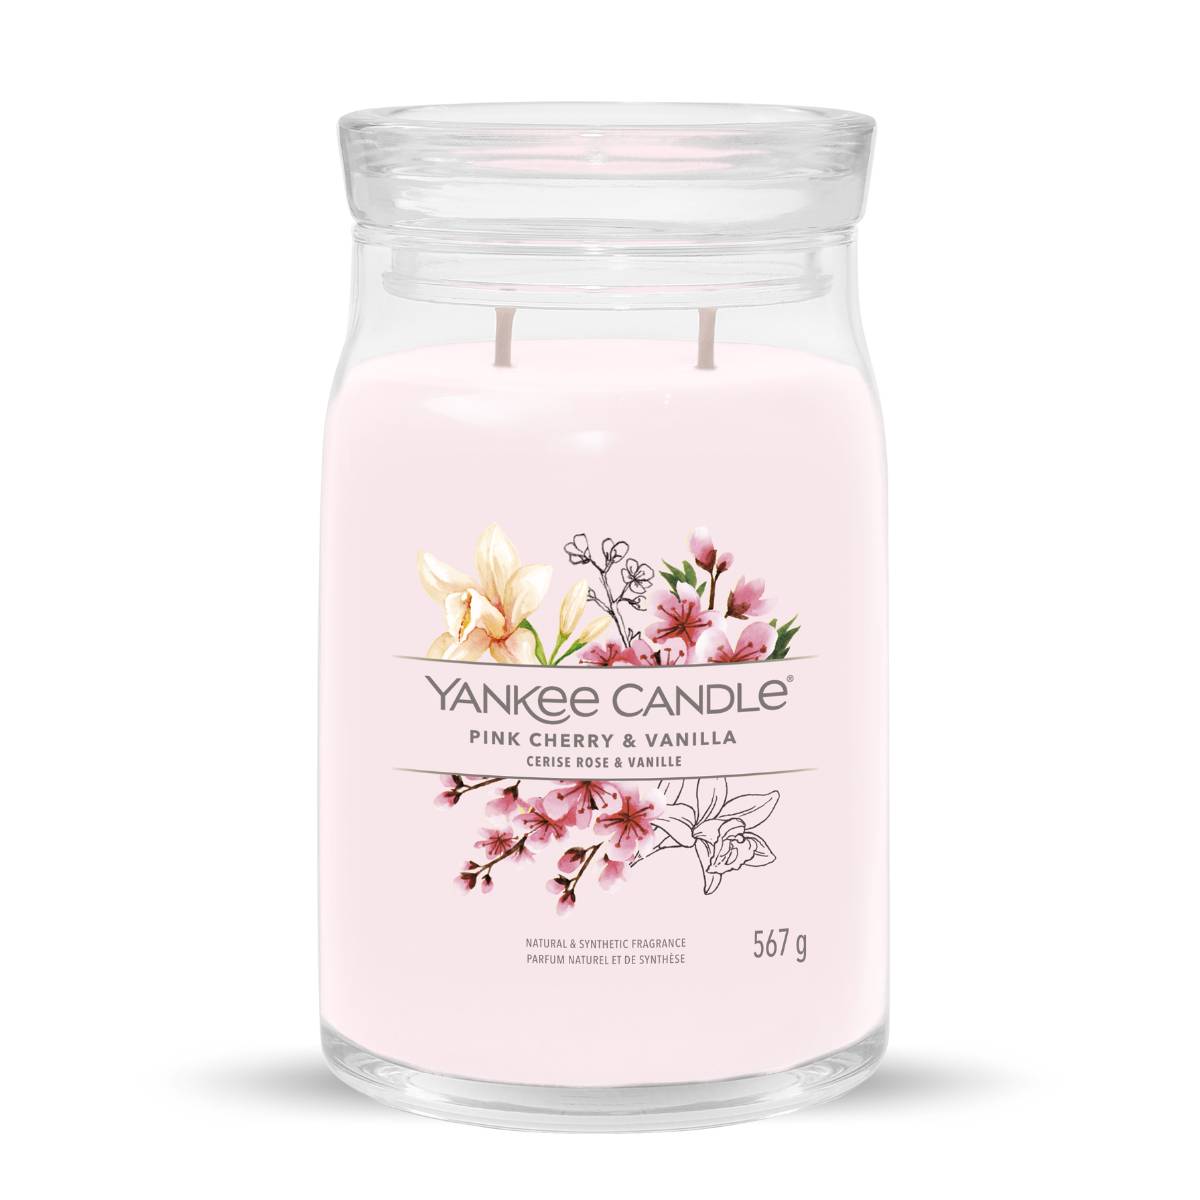 Pink Cherry & Vanilla - Large Jar 567g